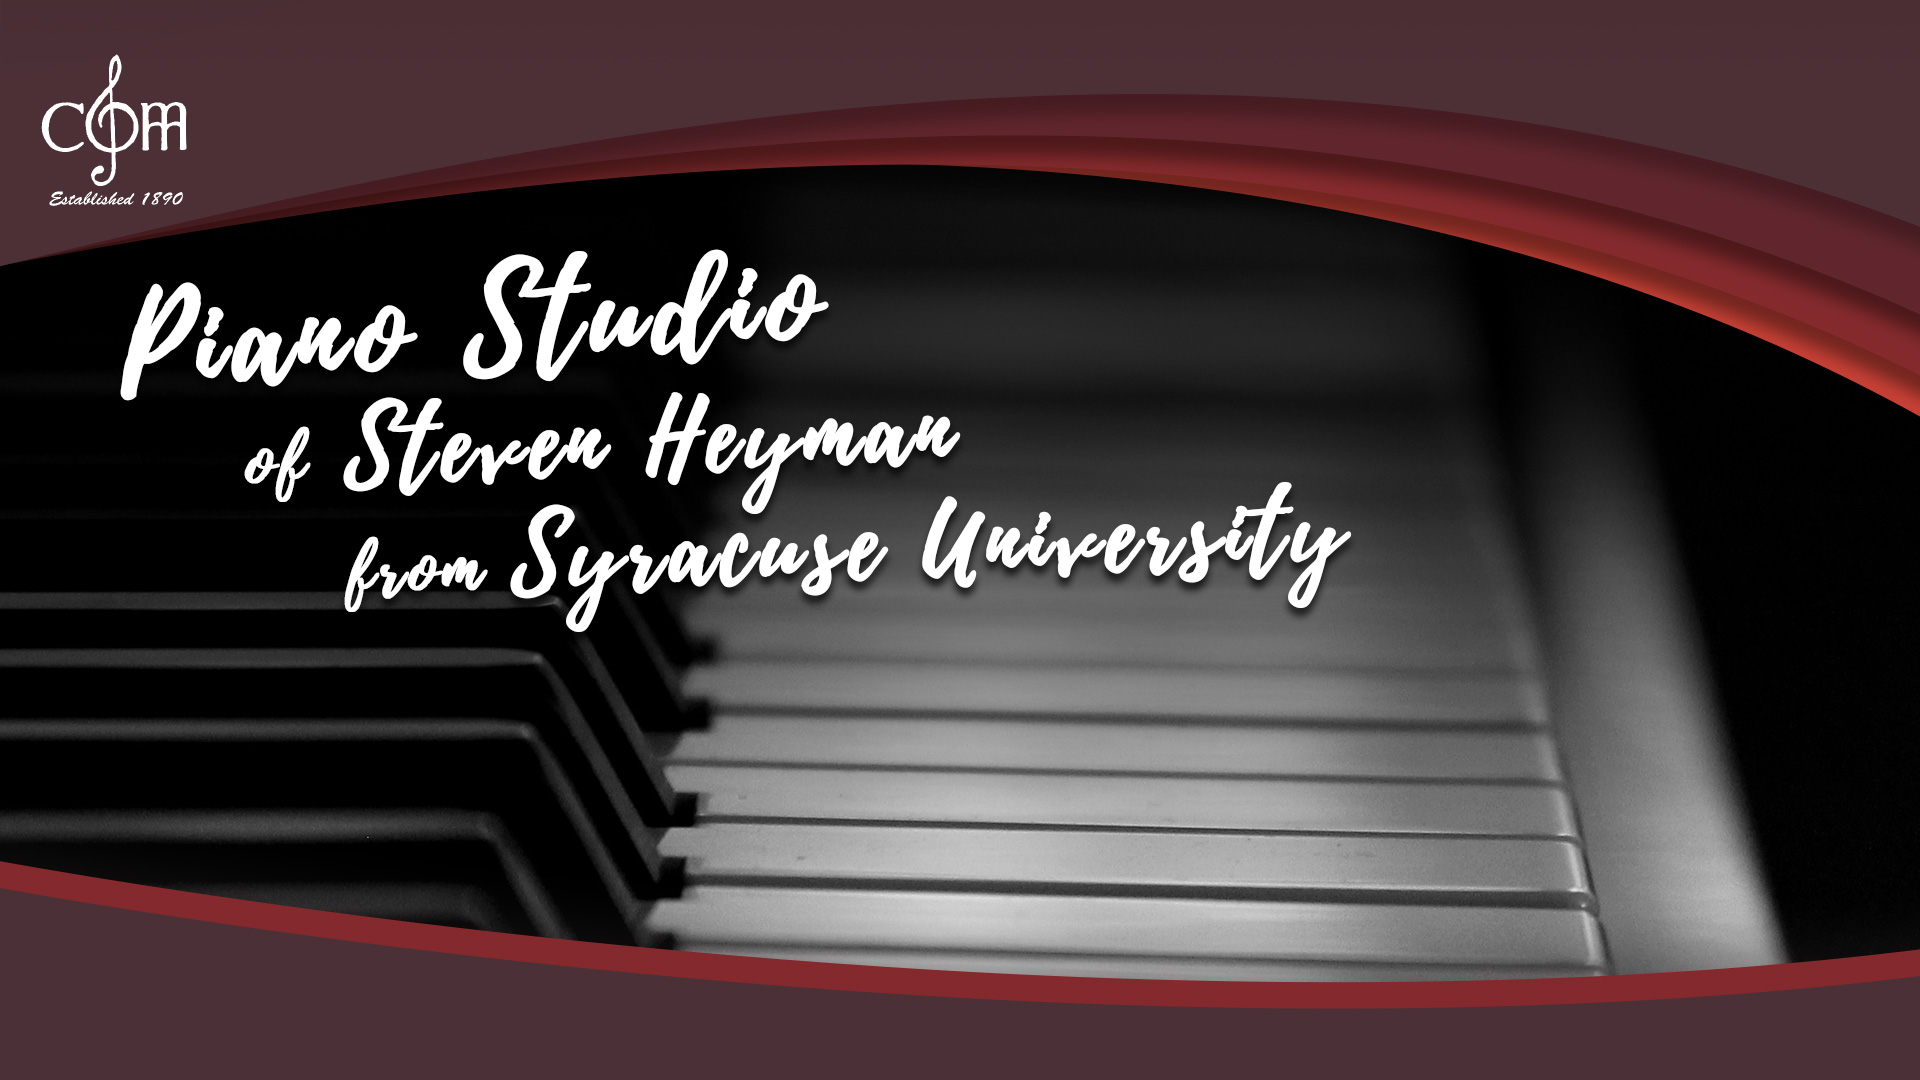 Piano Studio of Steven Heyman from SU